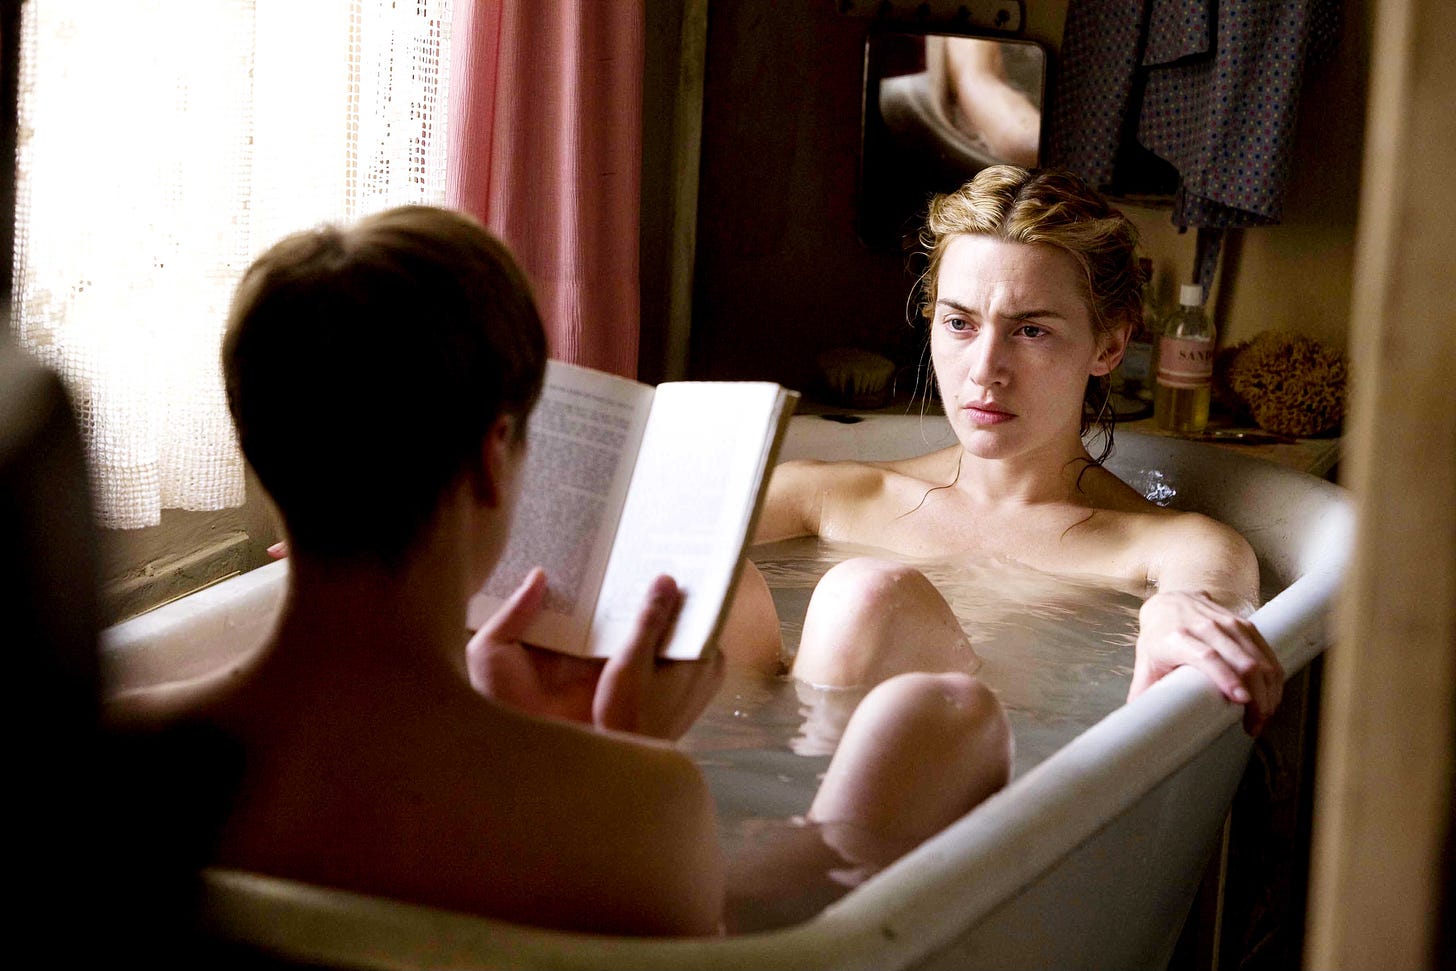 Still from the 2008 Stephen Daldry drama film The Reader starring Kate Winslet